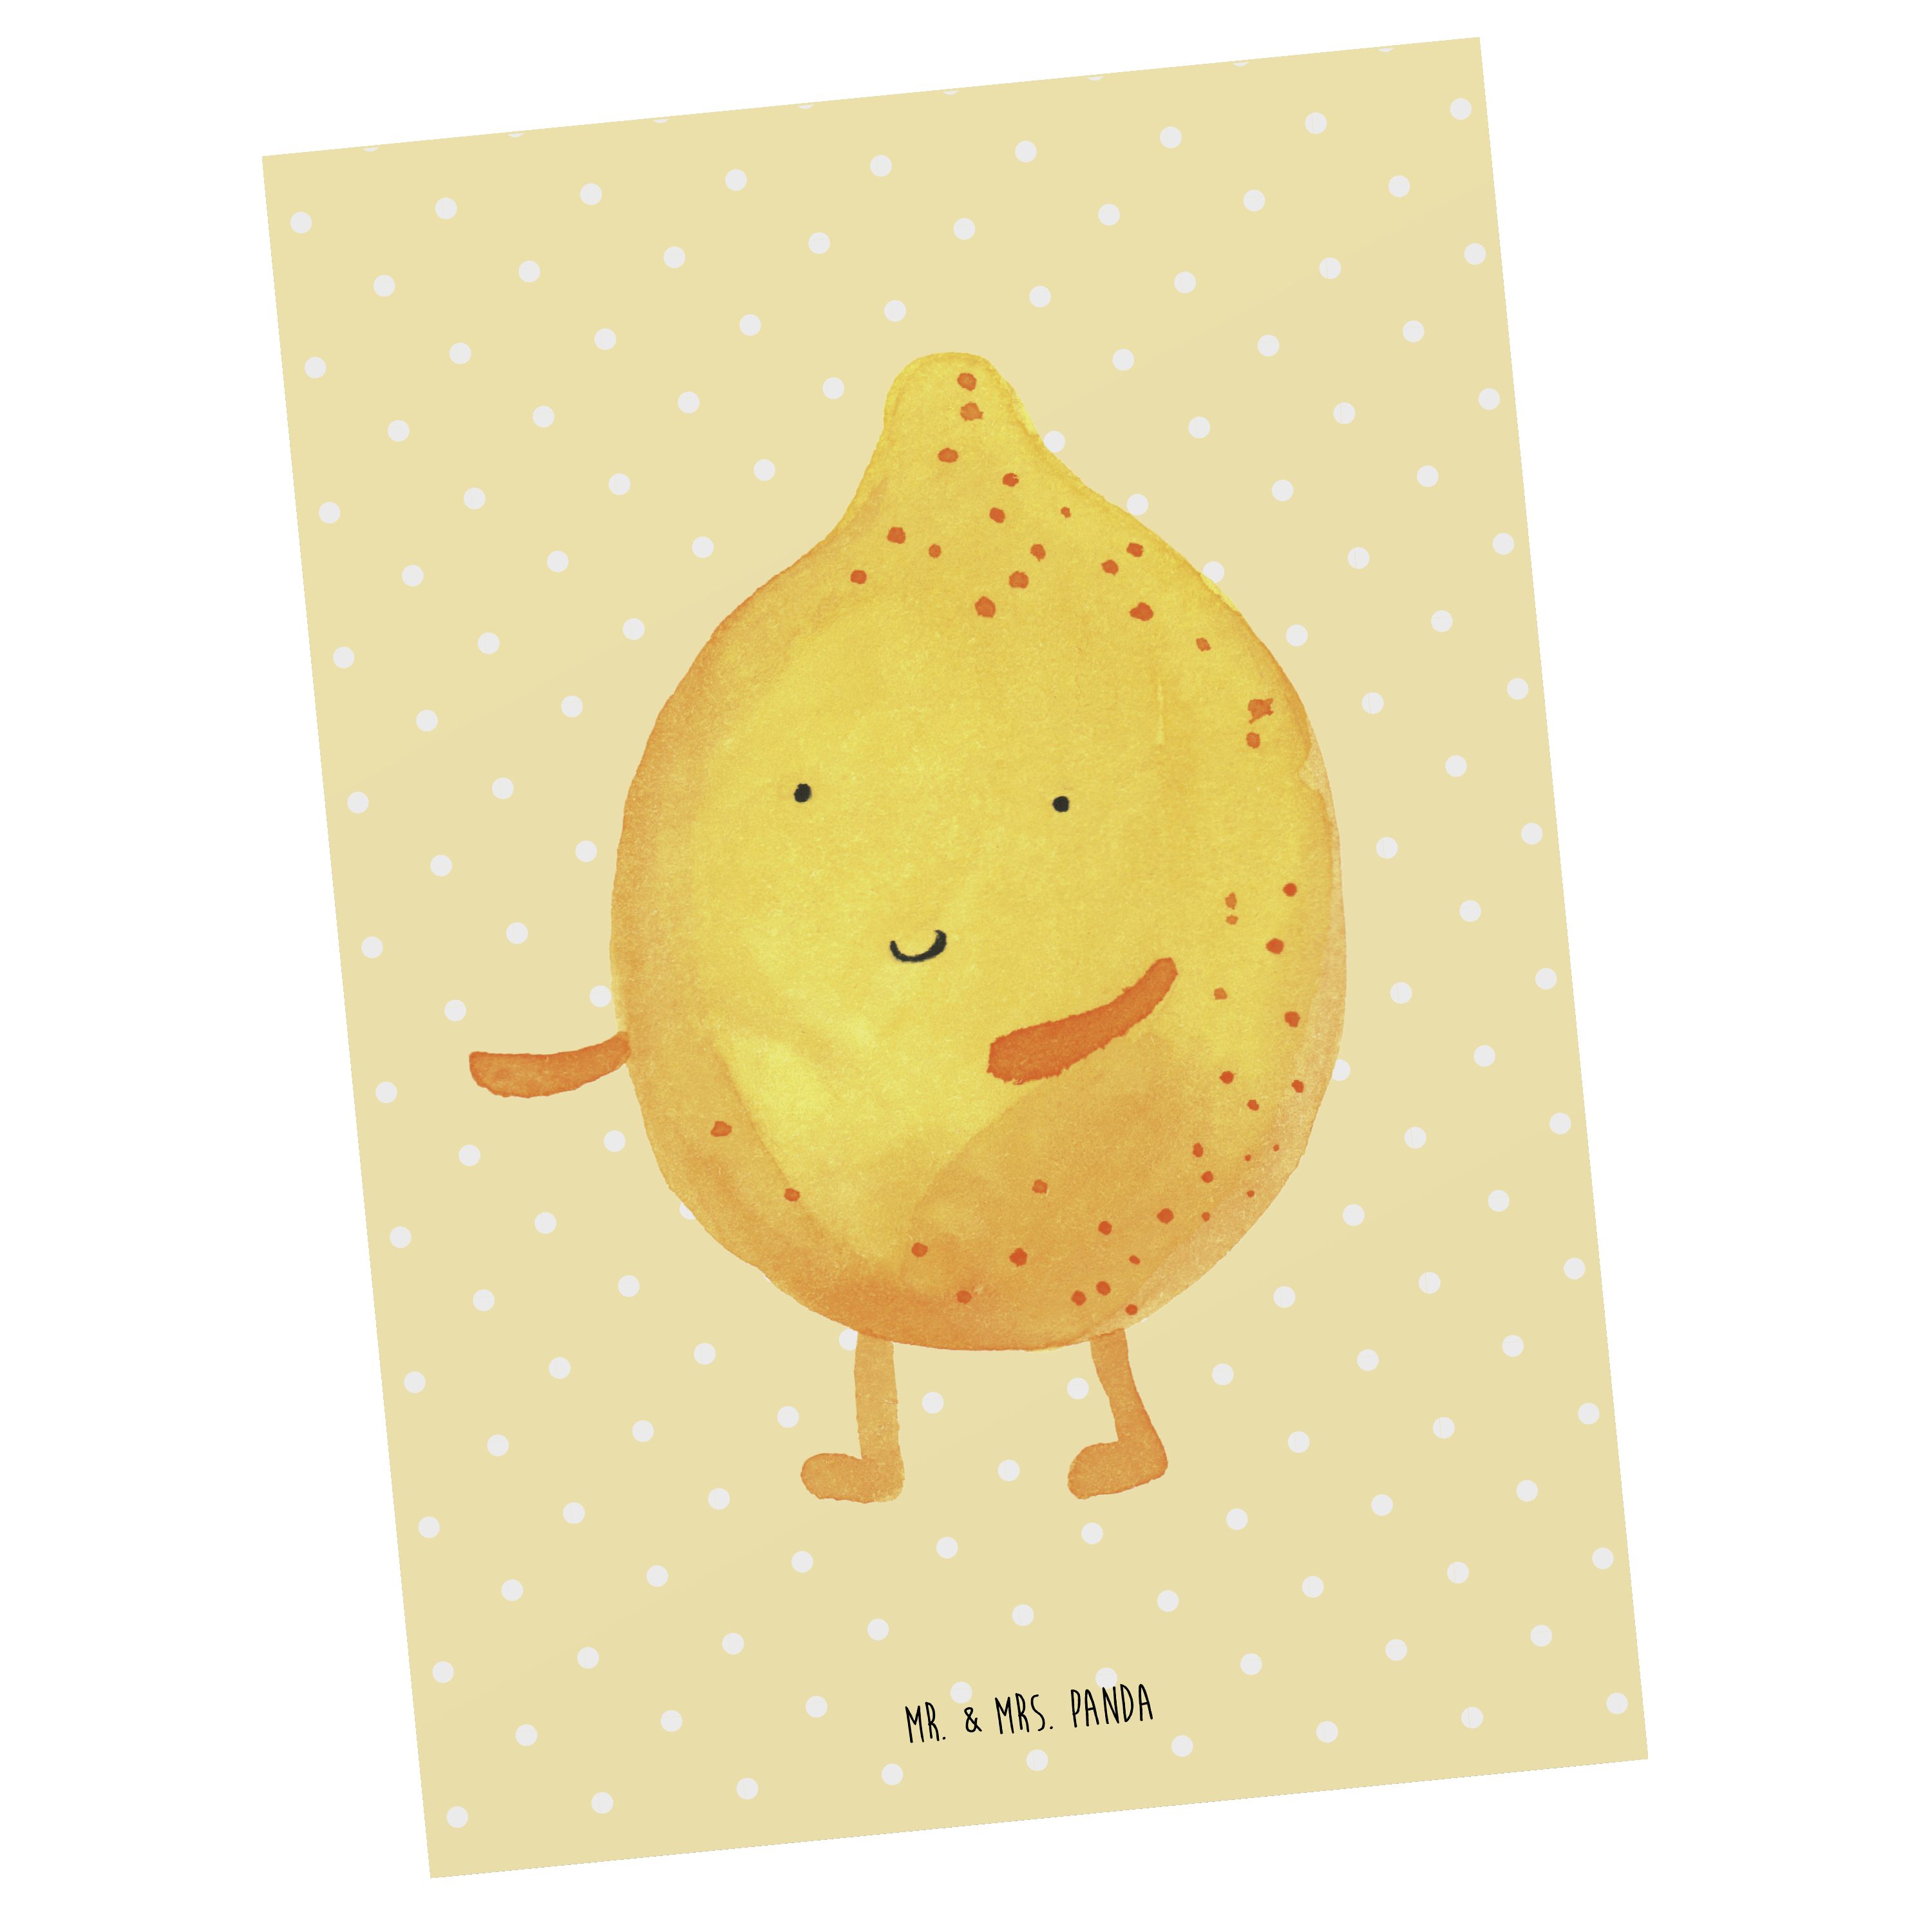 Mr. & Mrs. Panda Postkarte BestFriends-Lemon - Gelb Pastell - Geschenk, Tiermotive, Gute Laune